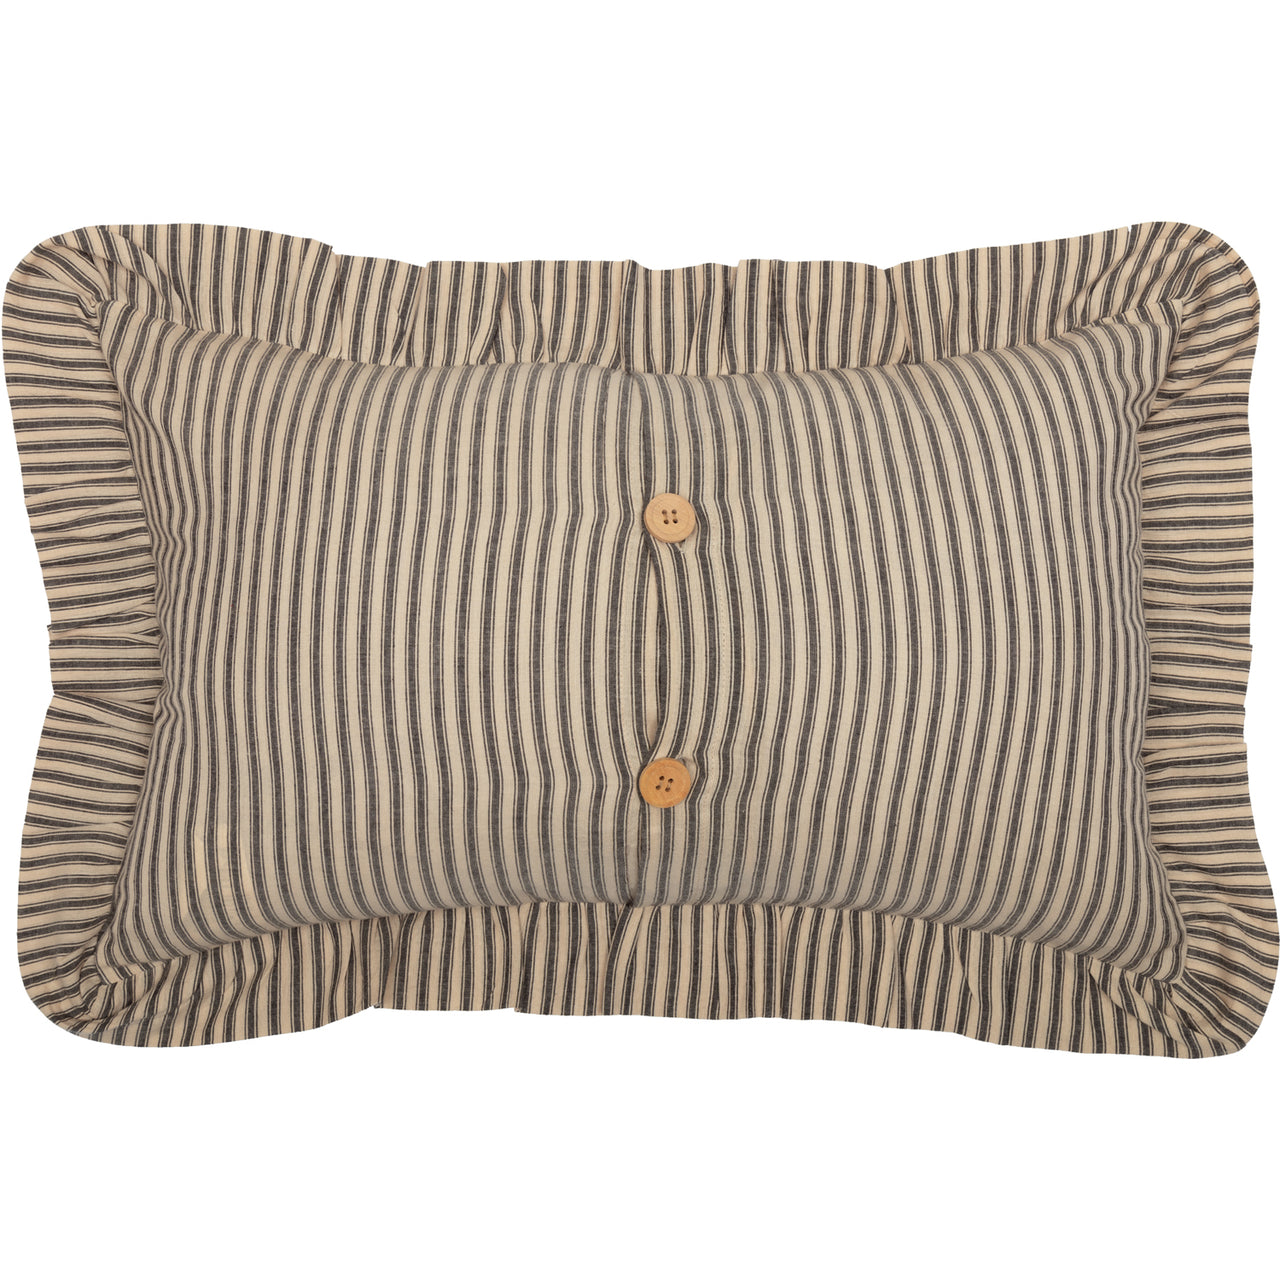 Sawyer Mill Charcoal Ticking Stripe Fabric Pillow 14x22 VHC Brands